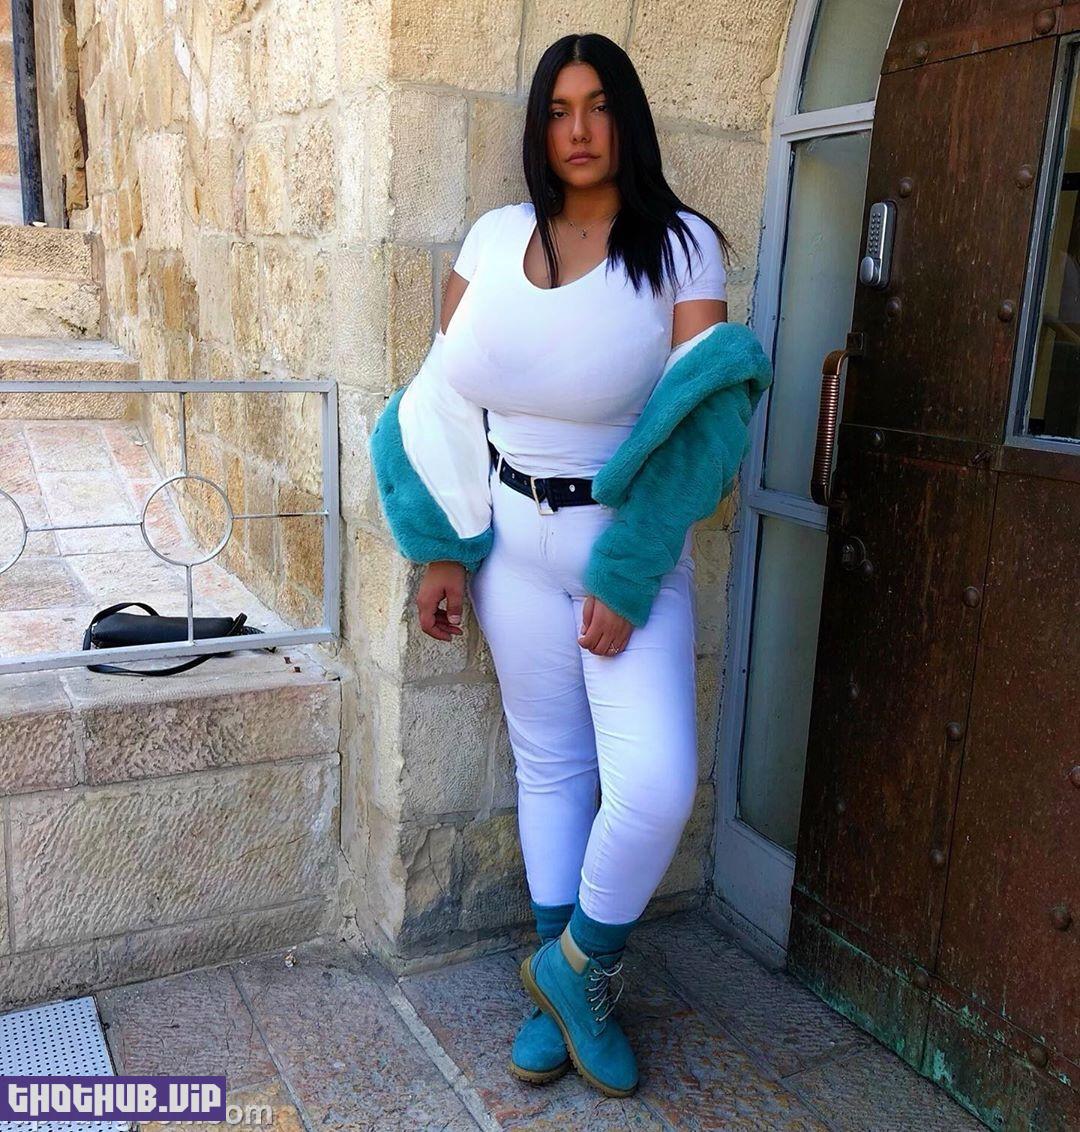 1661262752 494 Tomerasherian %E2%80%93 Huge Tits Israeli Girl